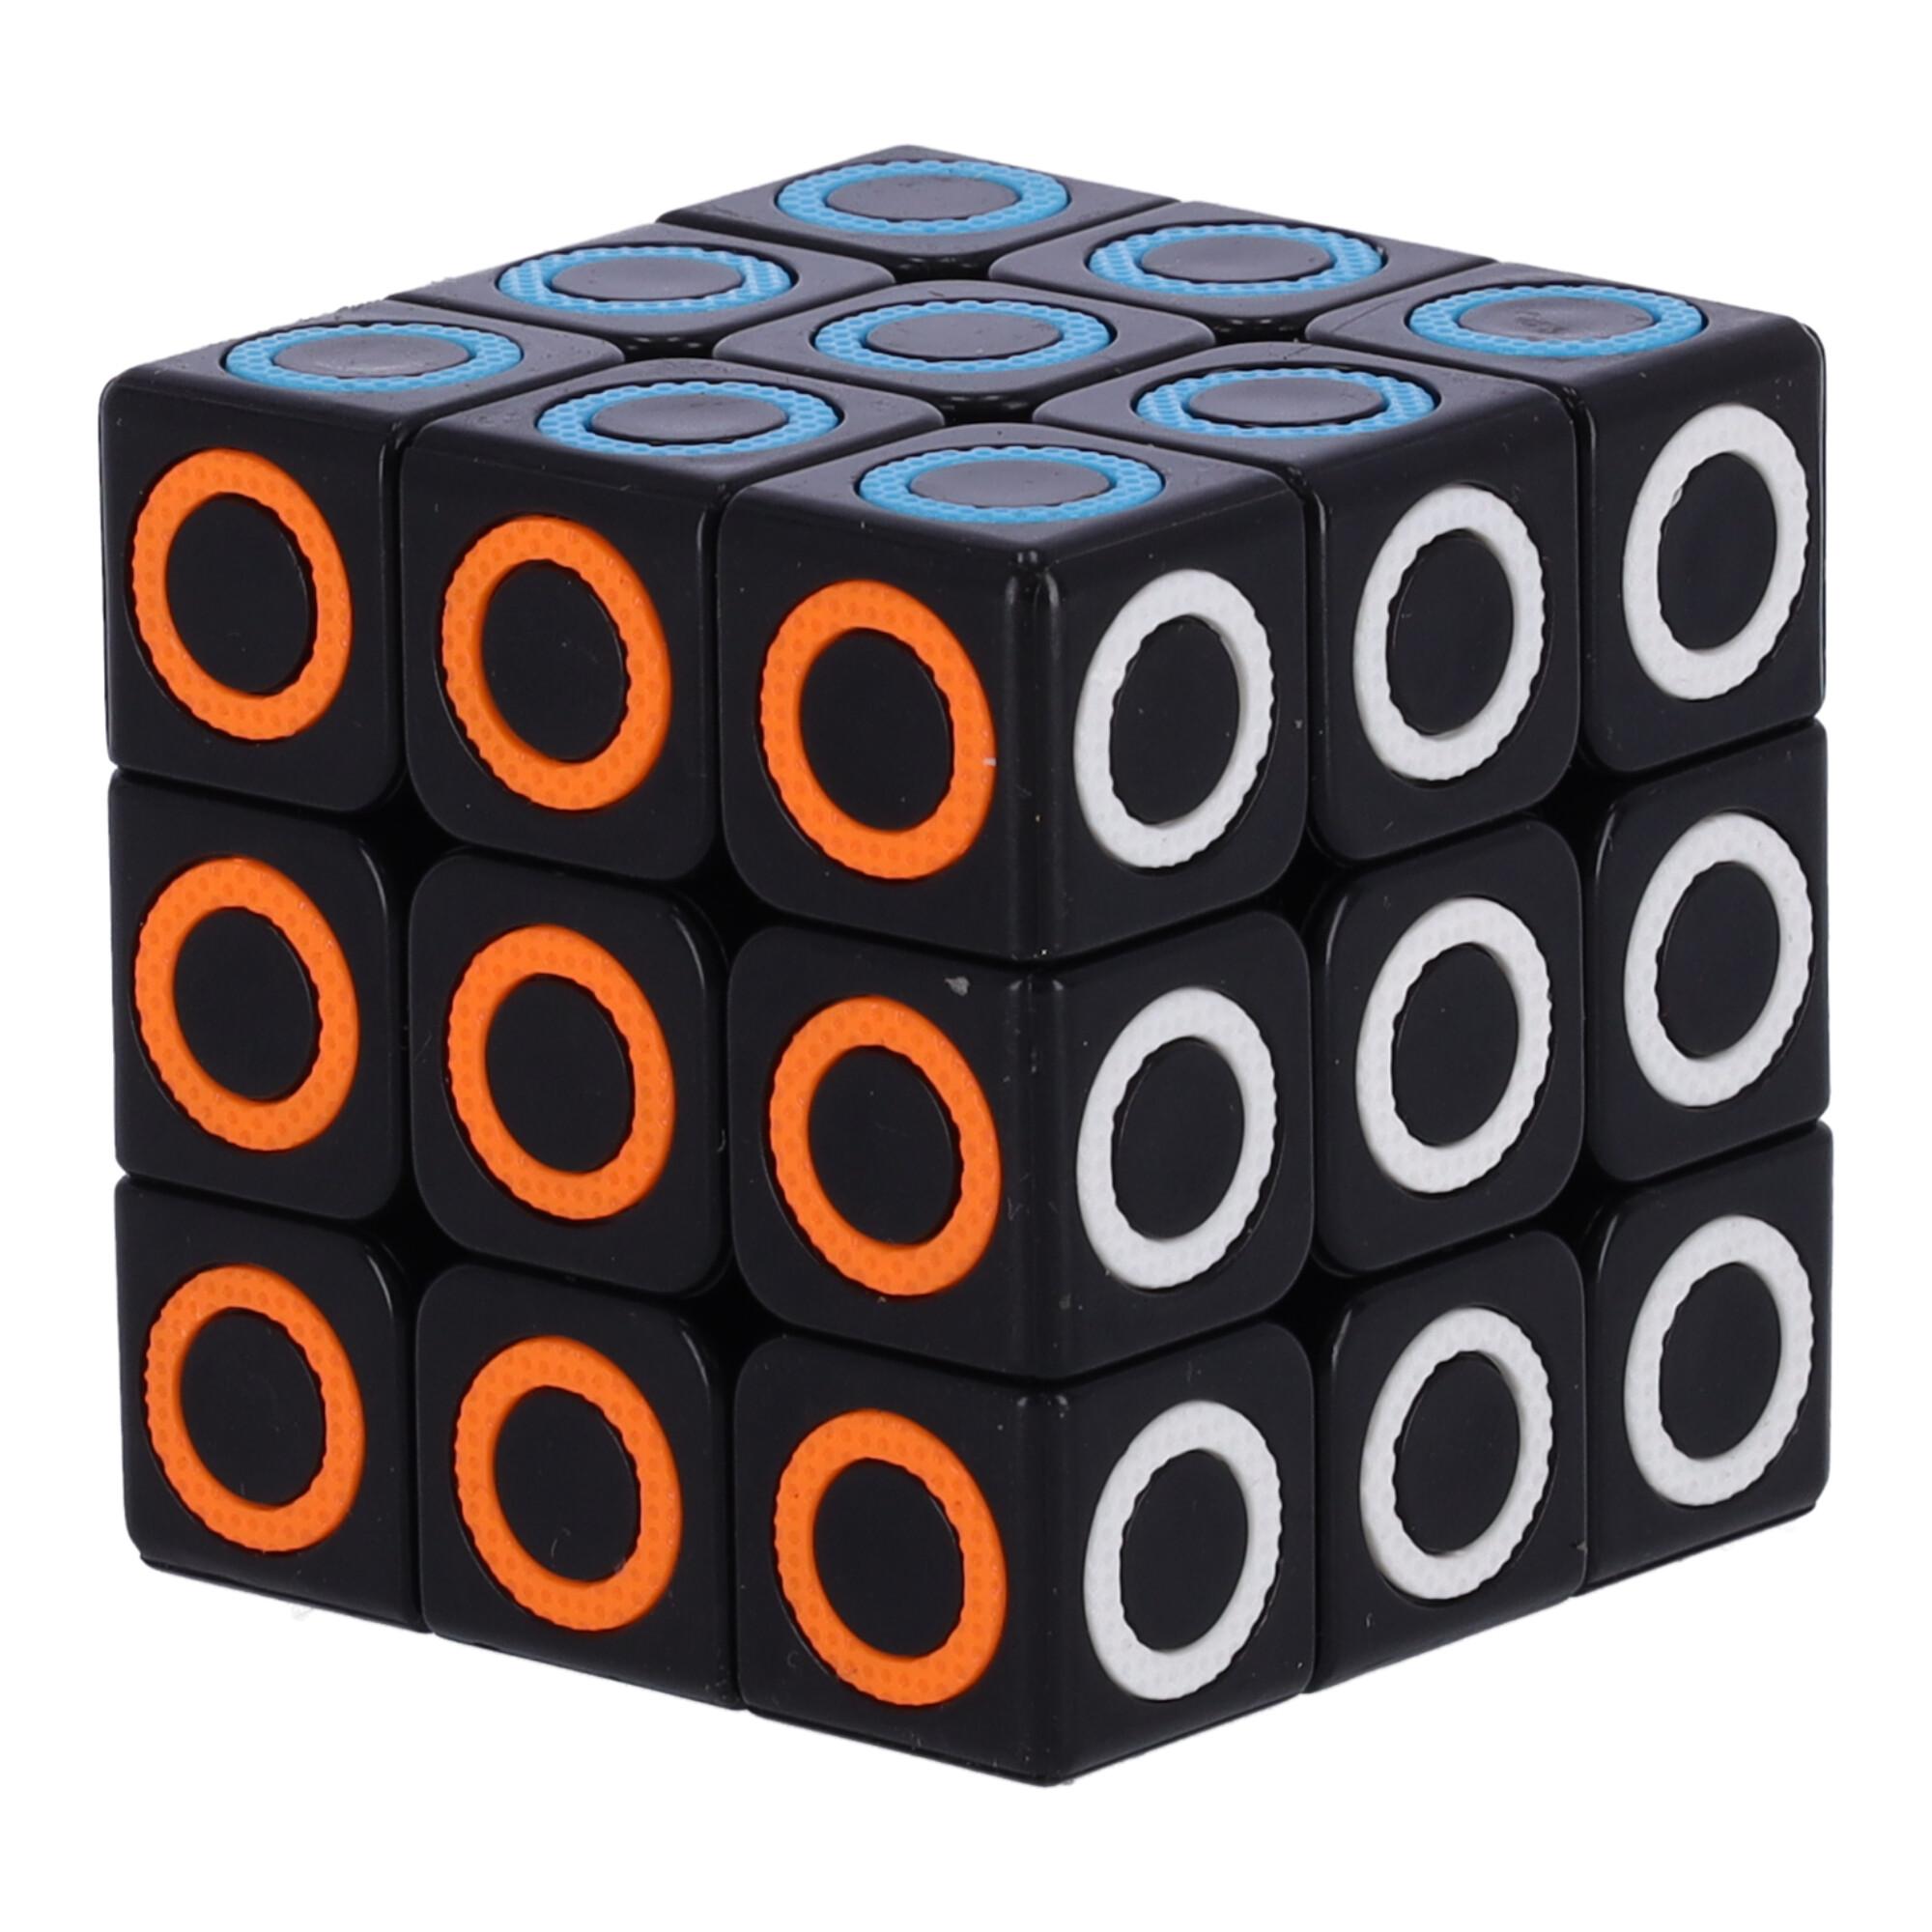 Modern jigsaw puzzle, Rubik's Cube - type I